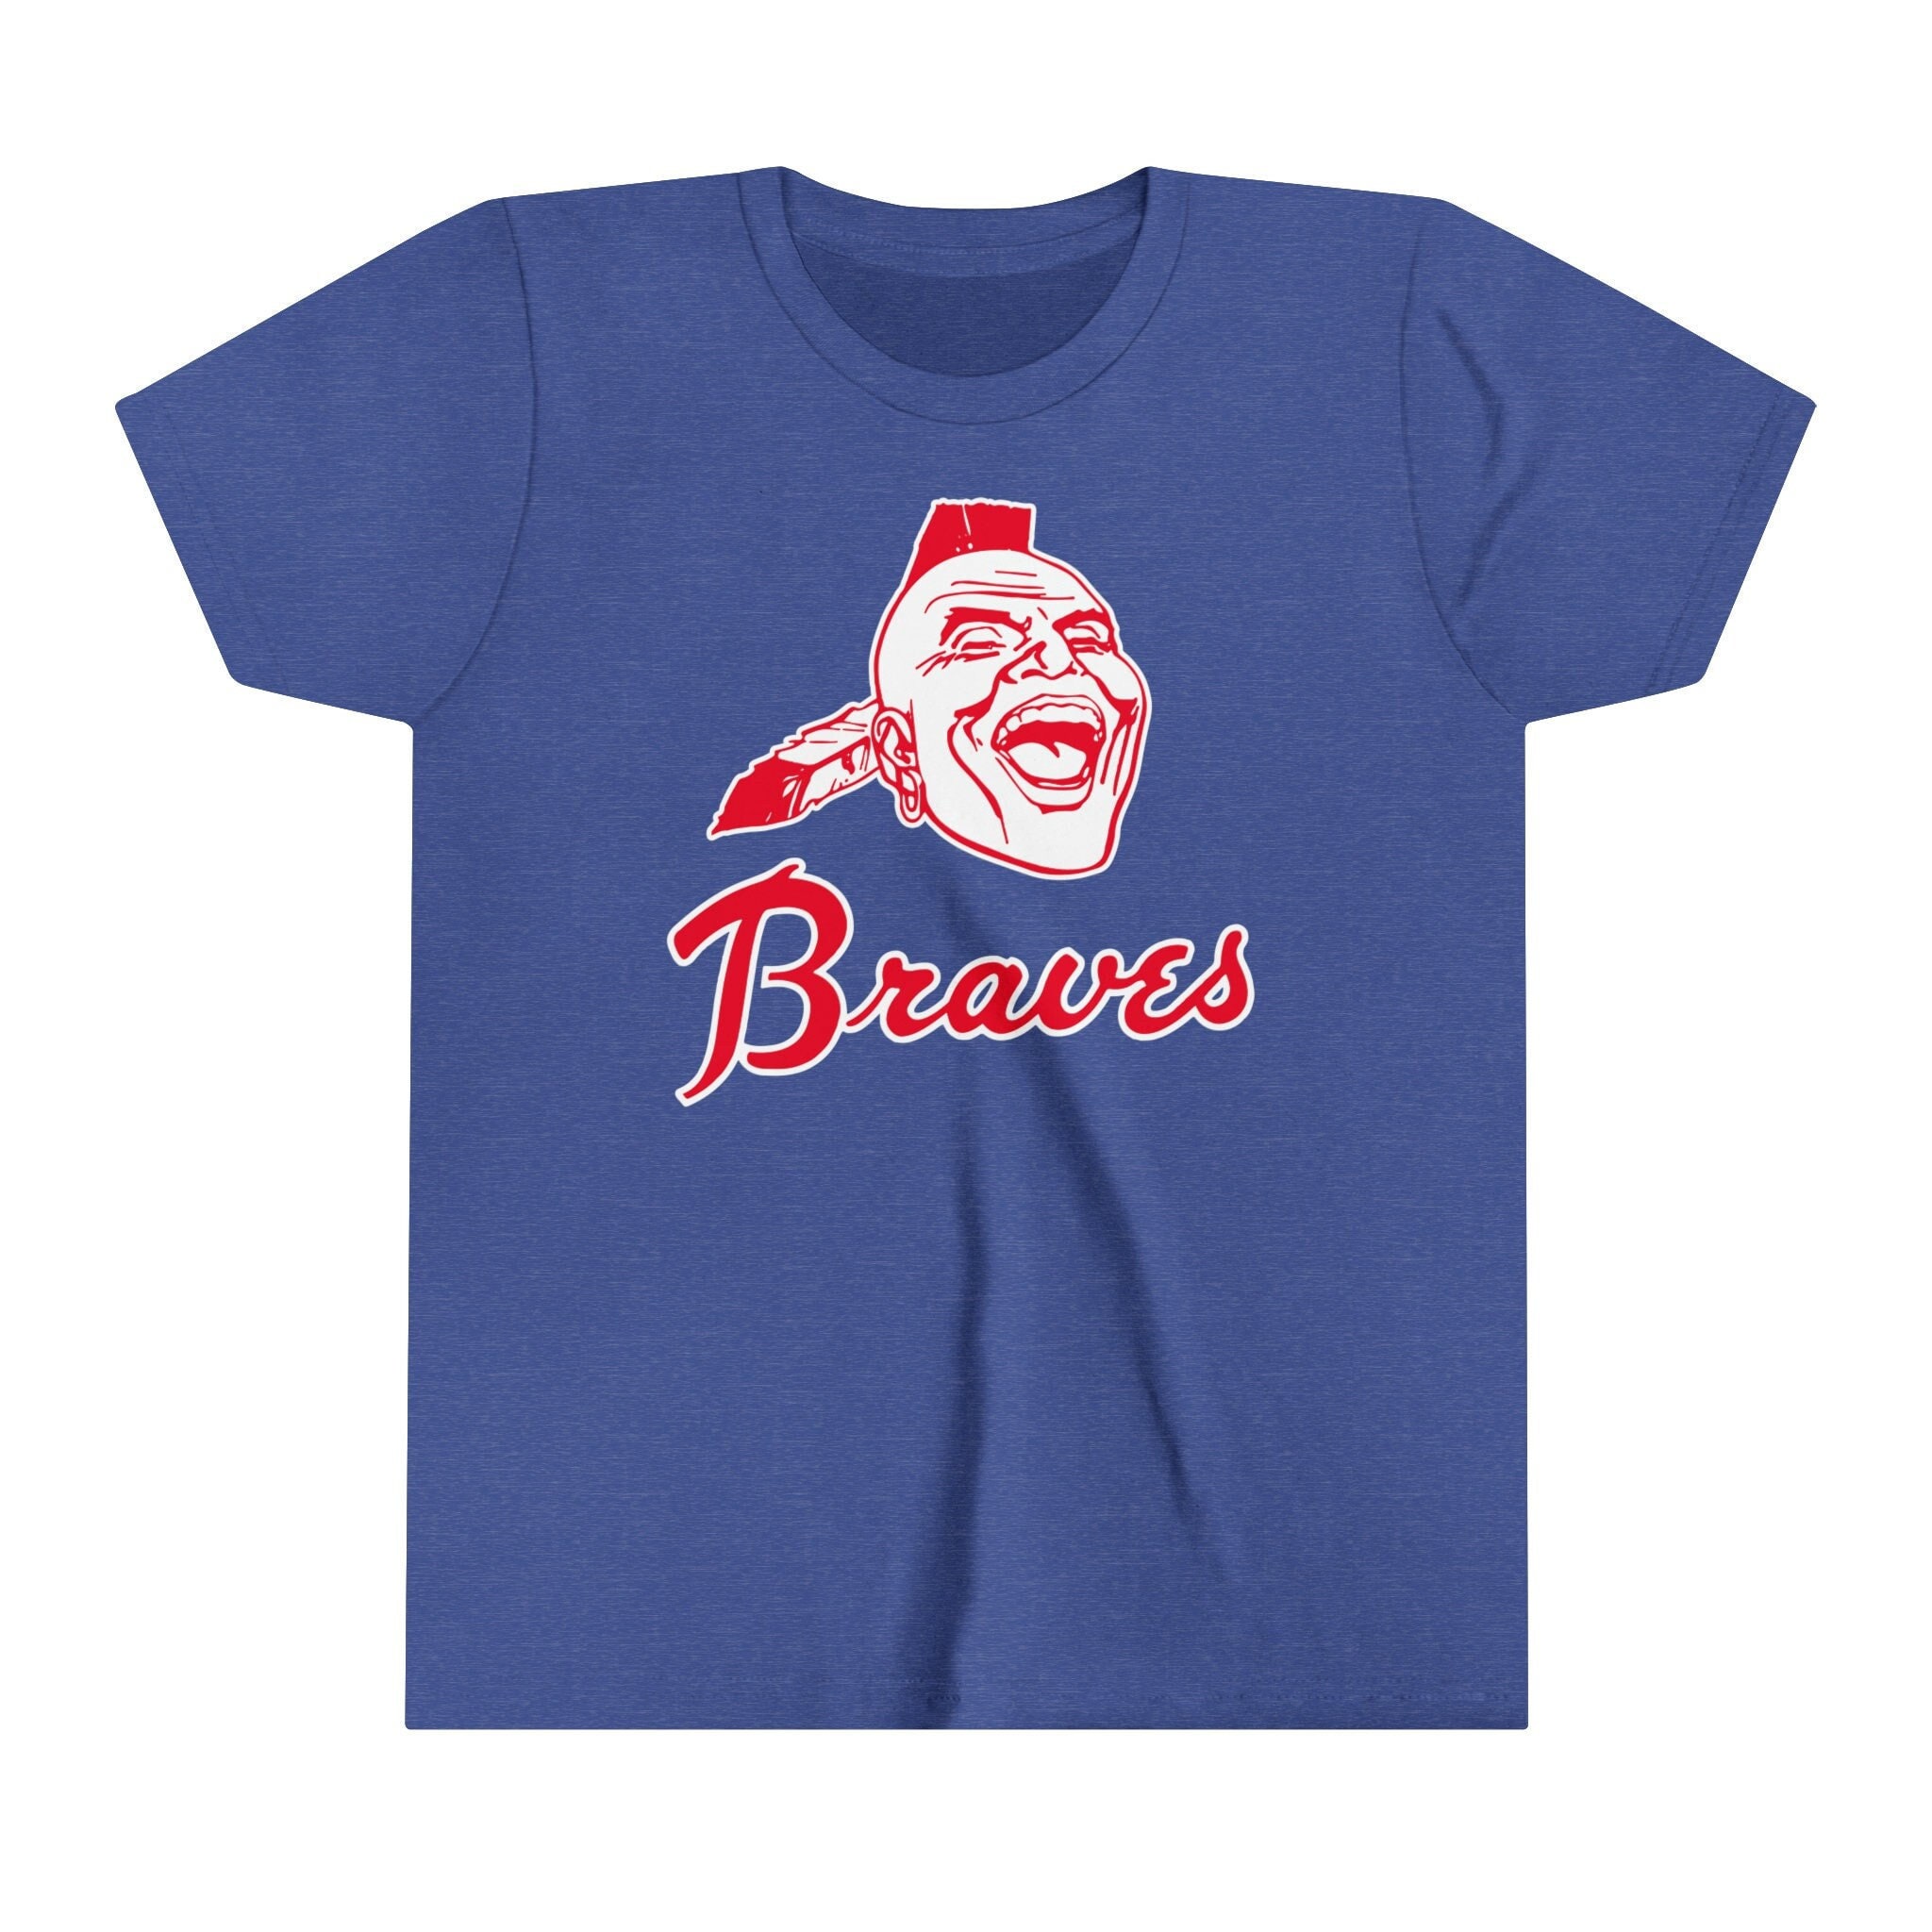 The Atlanta Braves cap pays tribute to their original mascot Chief Noc-A- Homa (Knock a Homer).